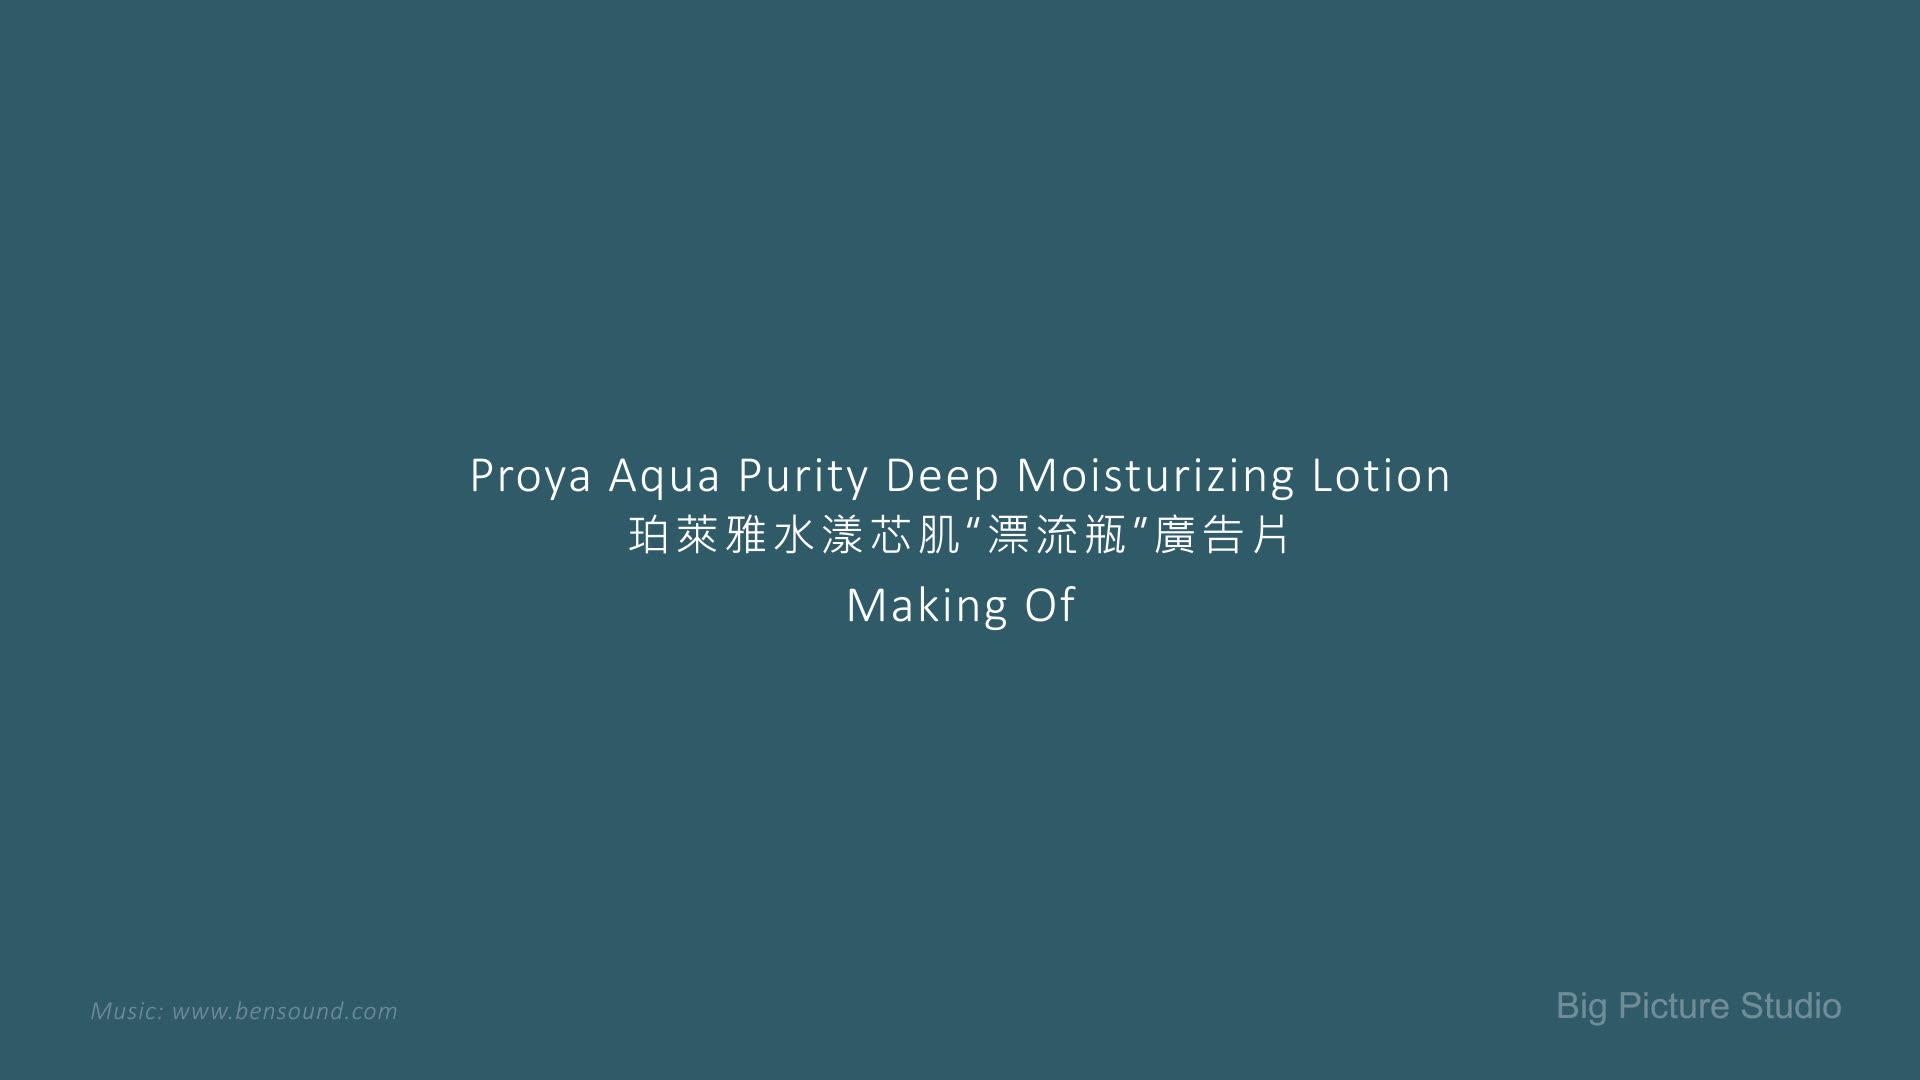 Making of - Proya 廣告片